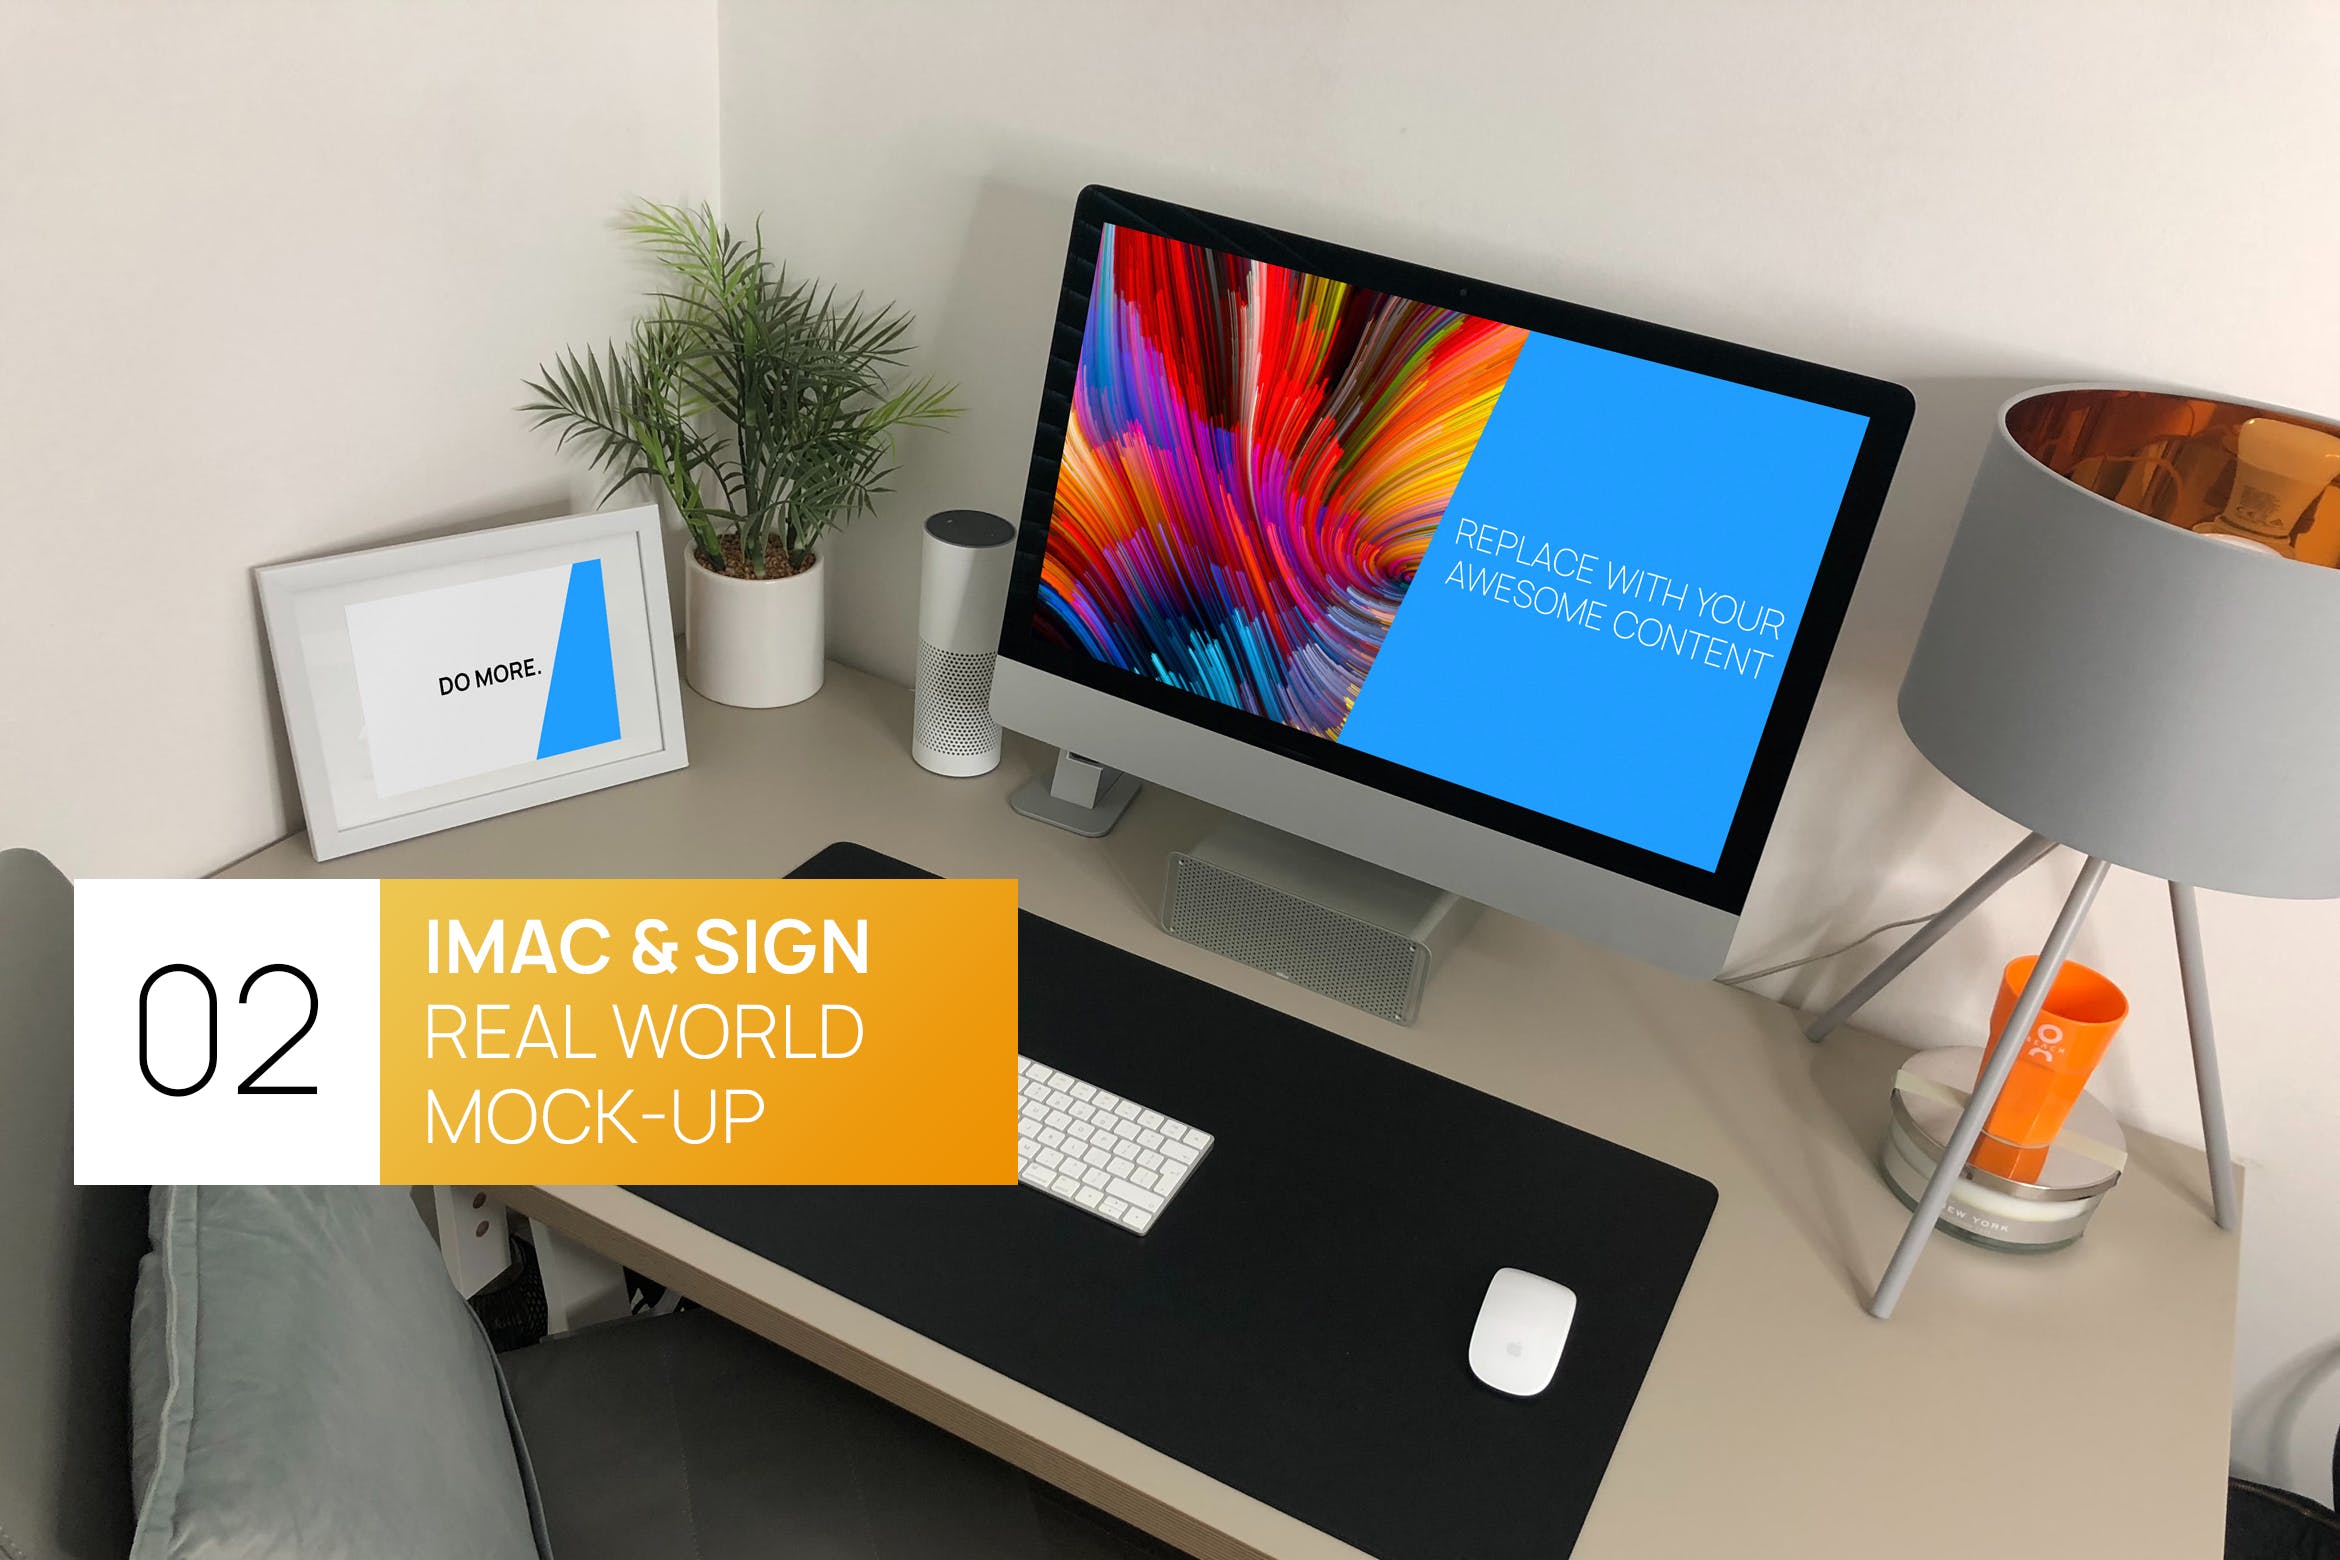 宜家家居风格办公桌场景27寸iMac电脑普贤居精选样机 iMac 27 with Sign Real World Photo Mock-up插图